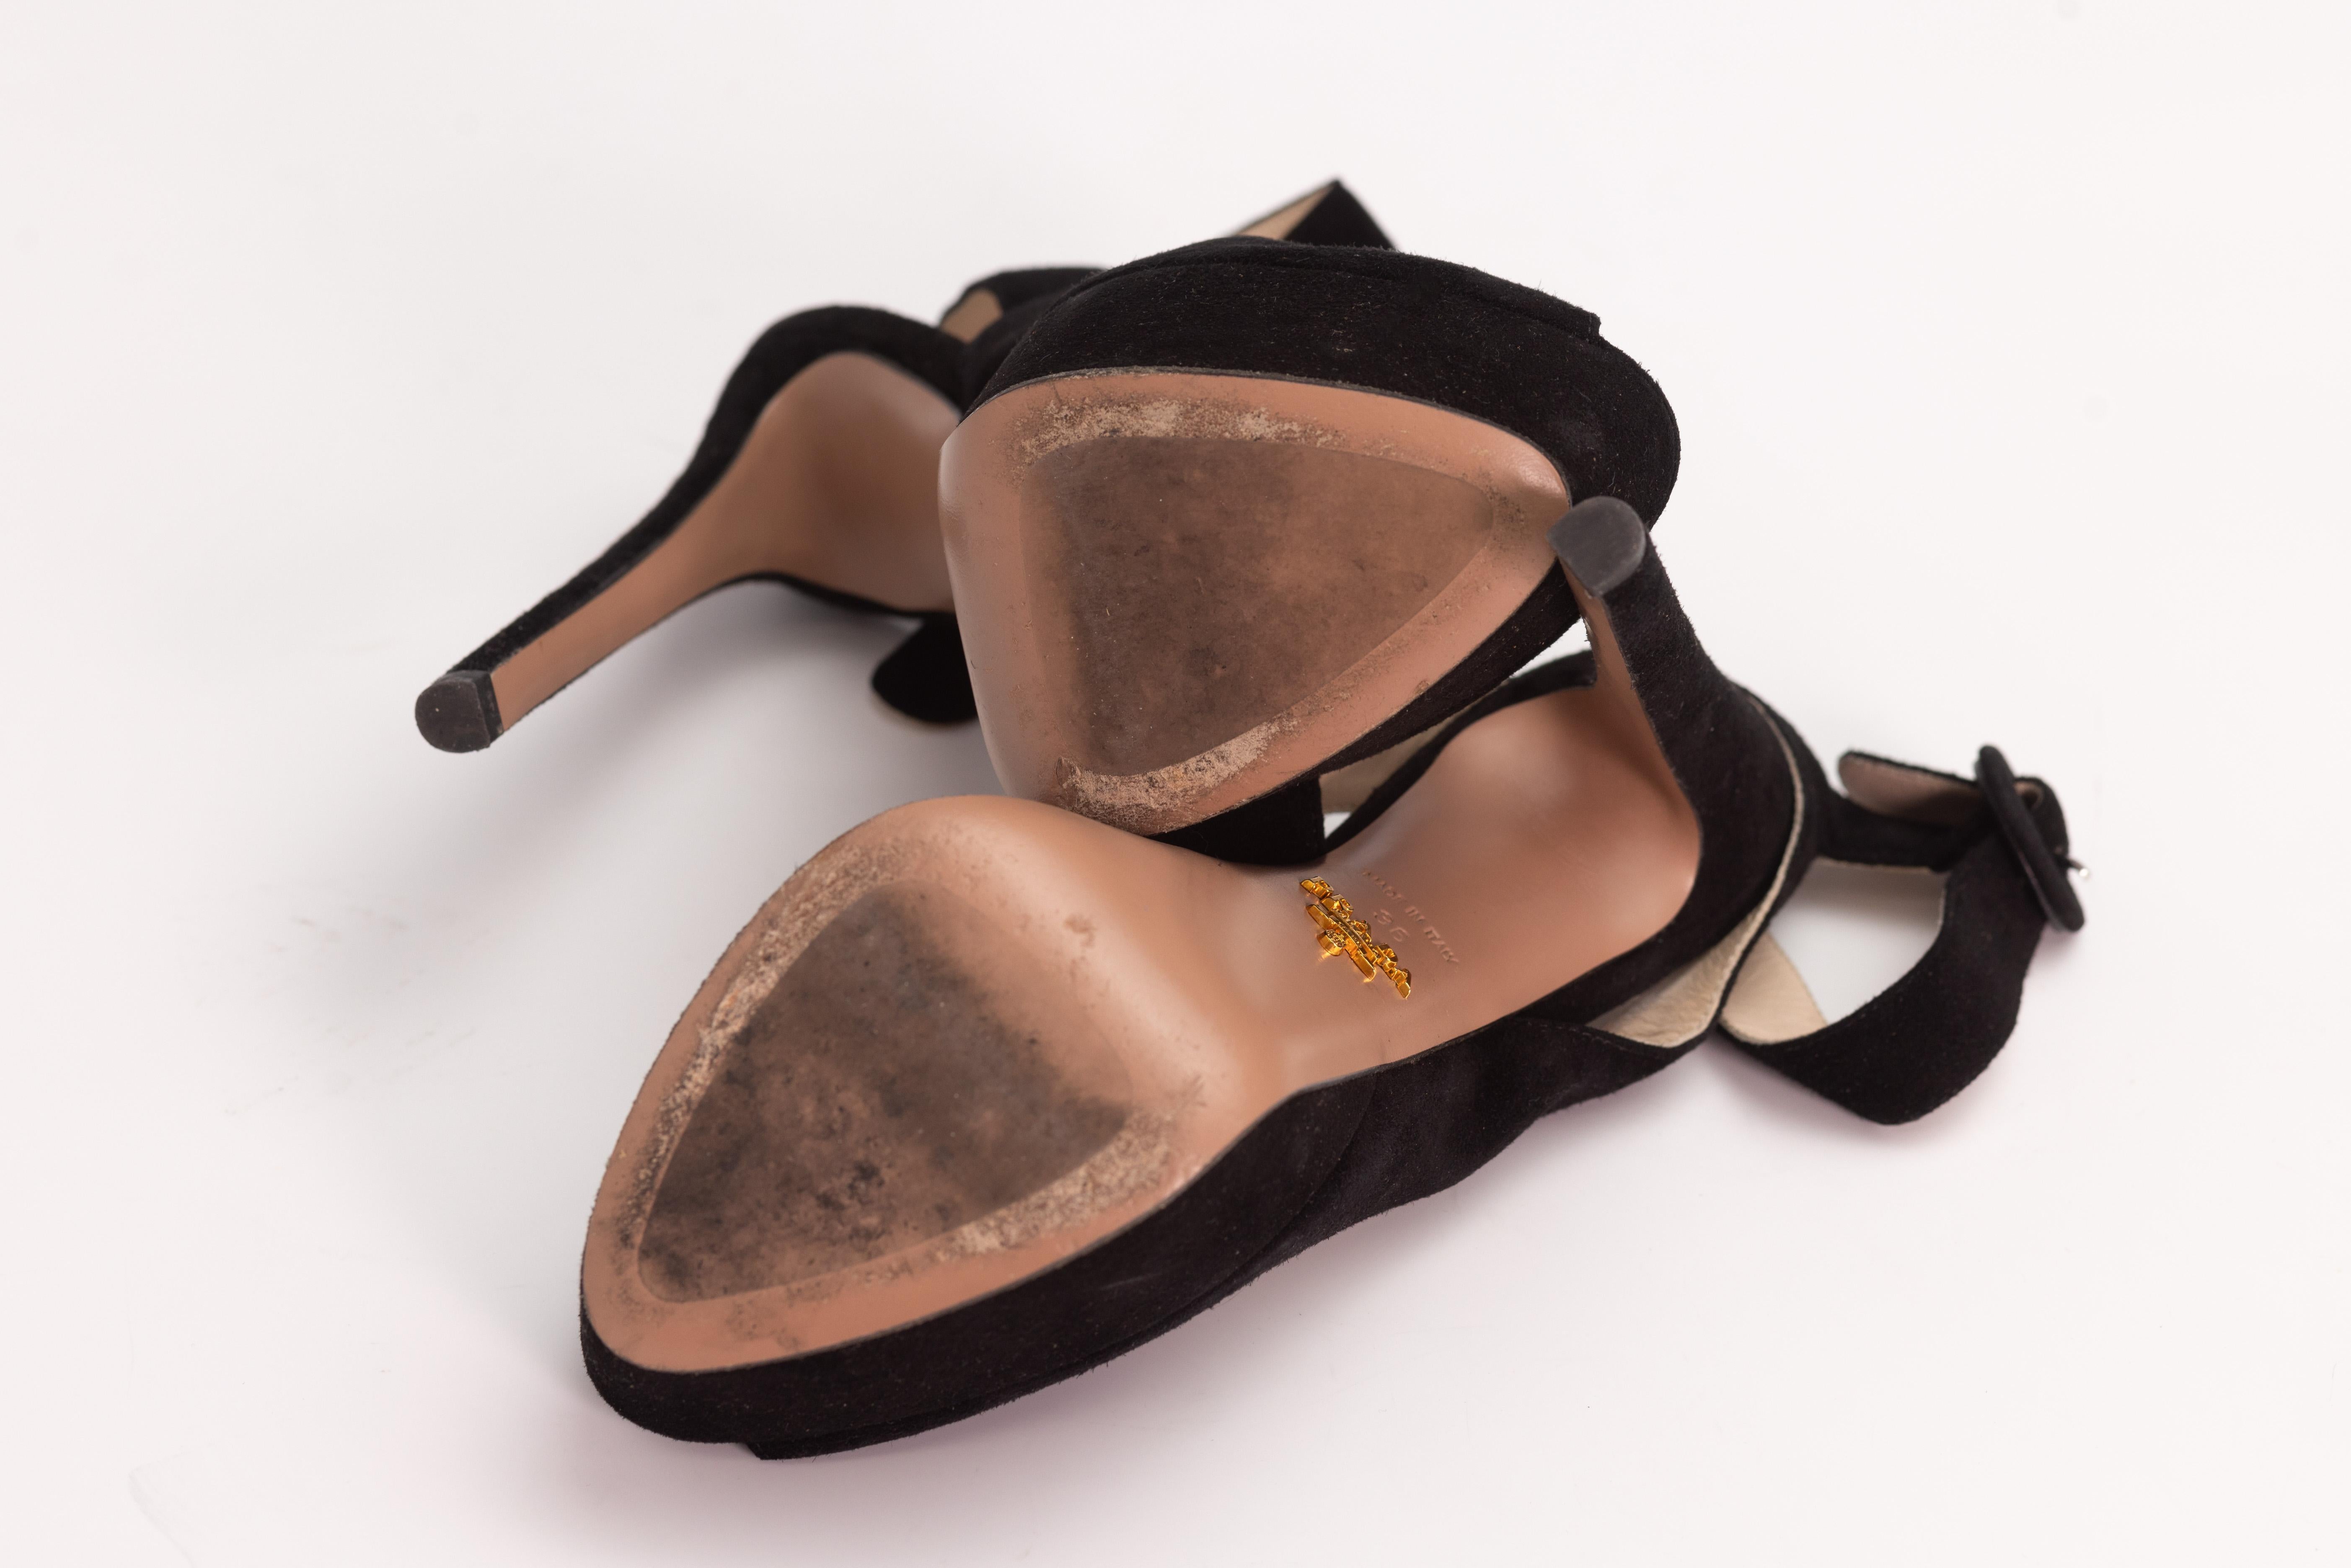 Prada Pumps Black Suede Platform Ankle Strap Peep Toe Heels (EU 36) For Sale 2